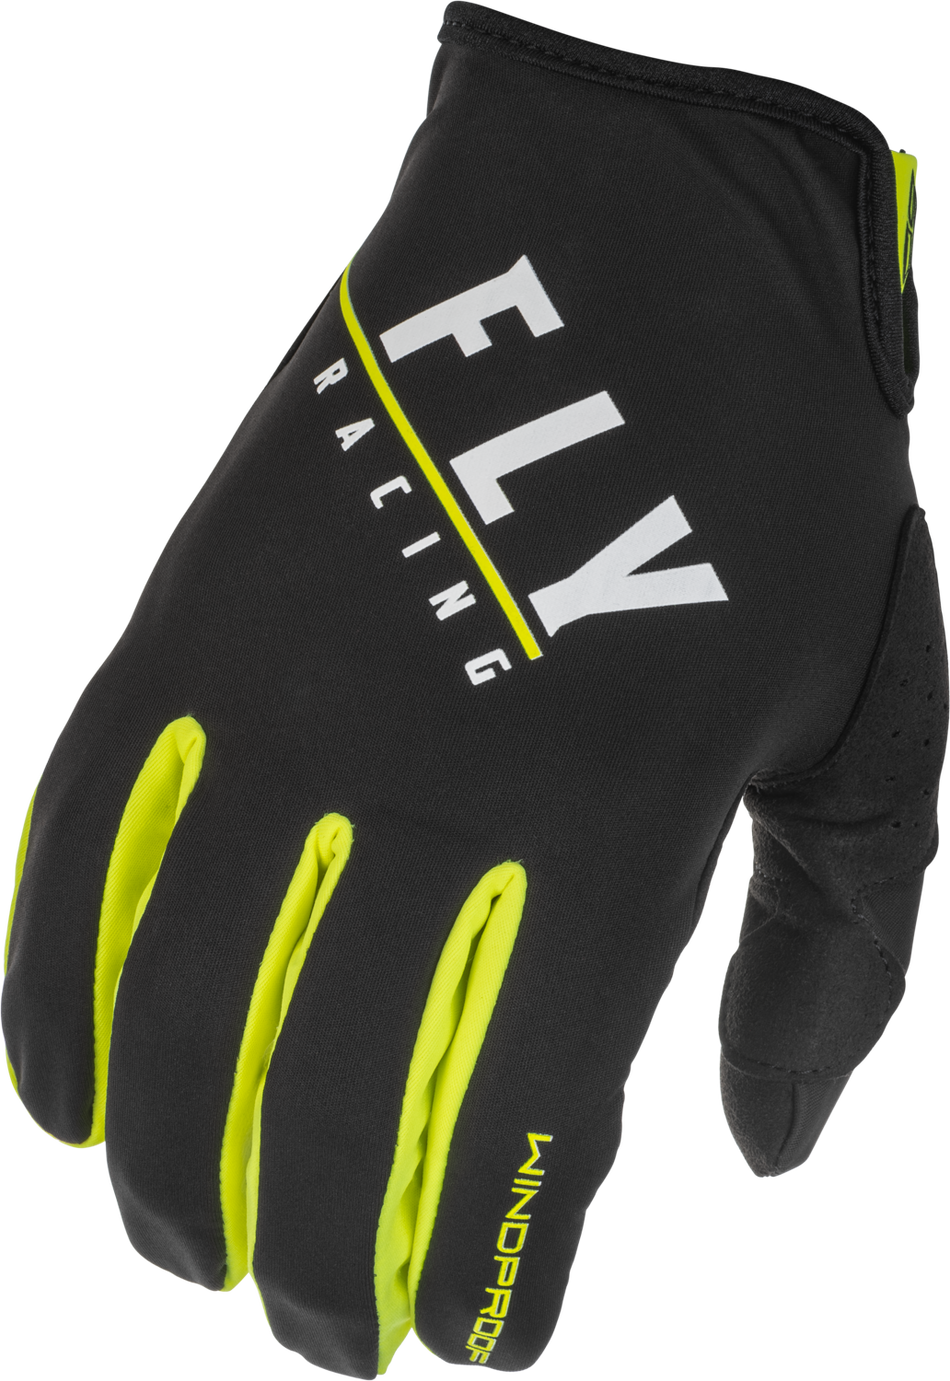 FLY RACING Windproof Gloves Black/Hi-Vis Sz 09 371-14209